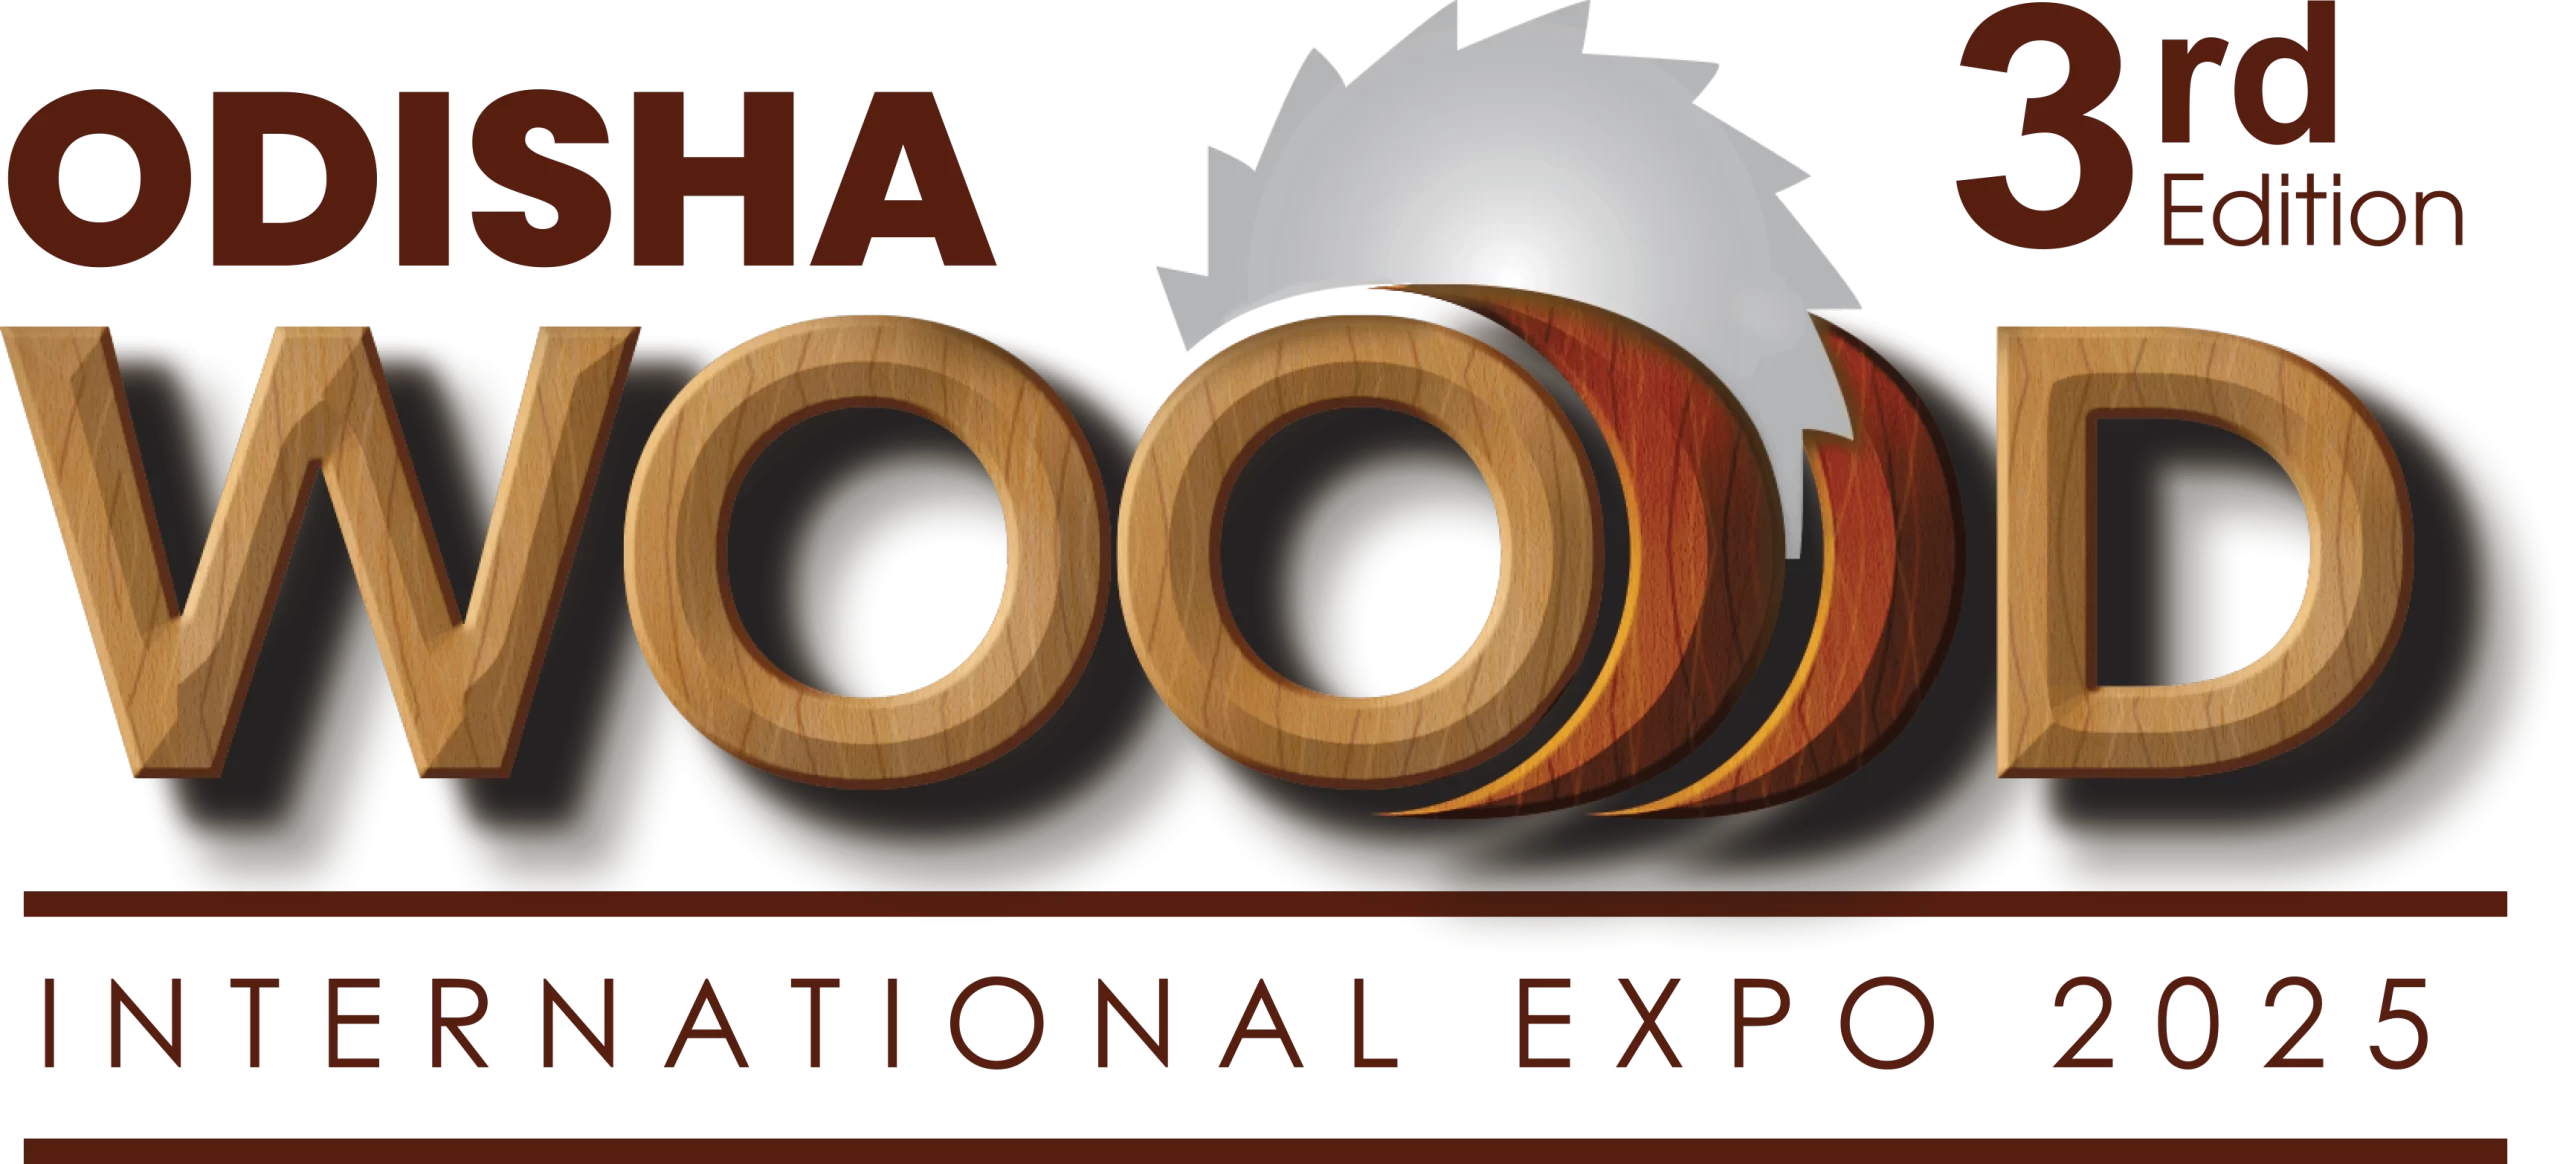 3rd Odisha Wood Logo